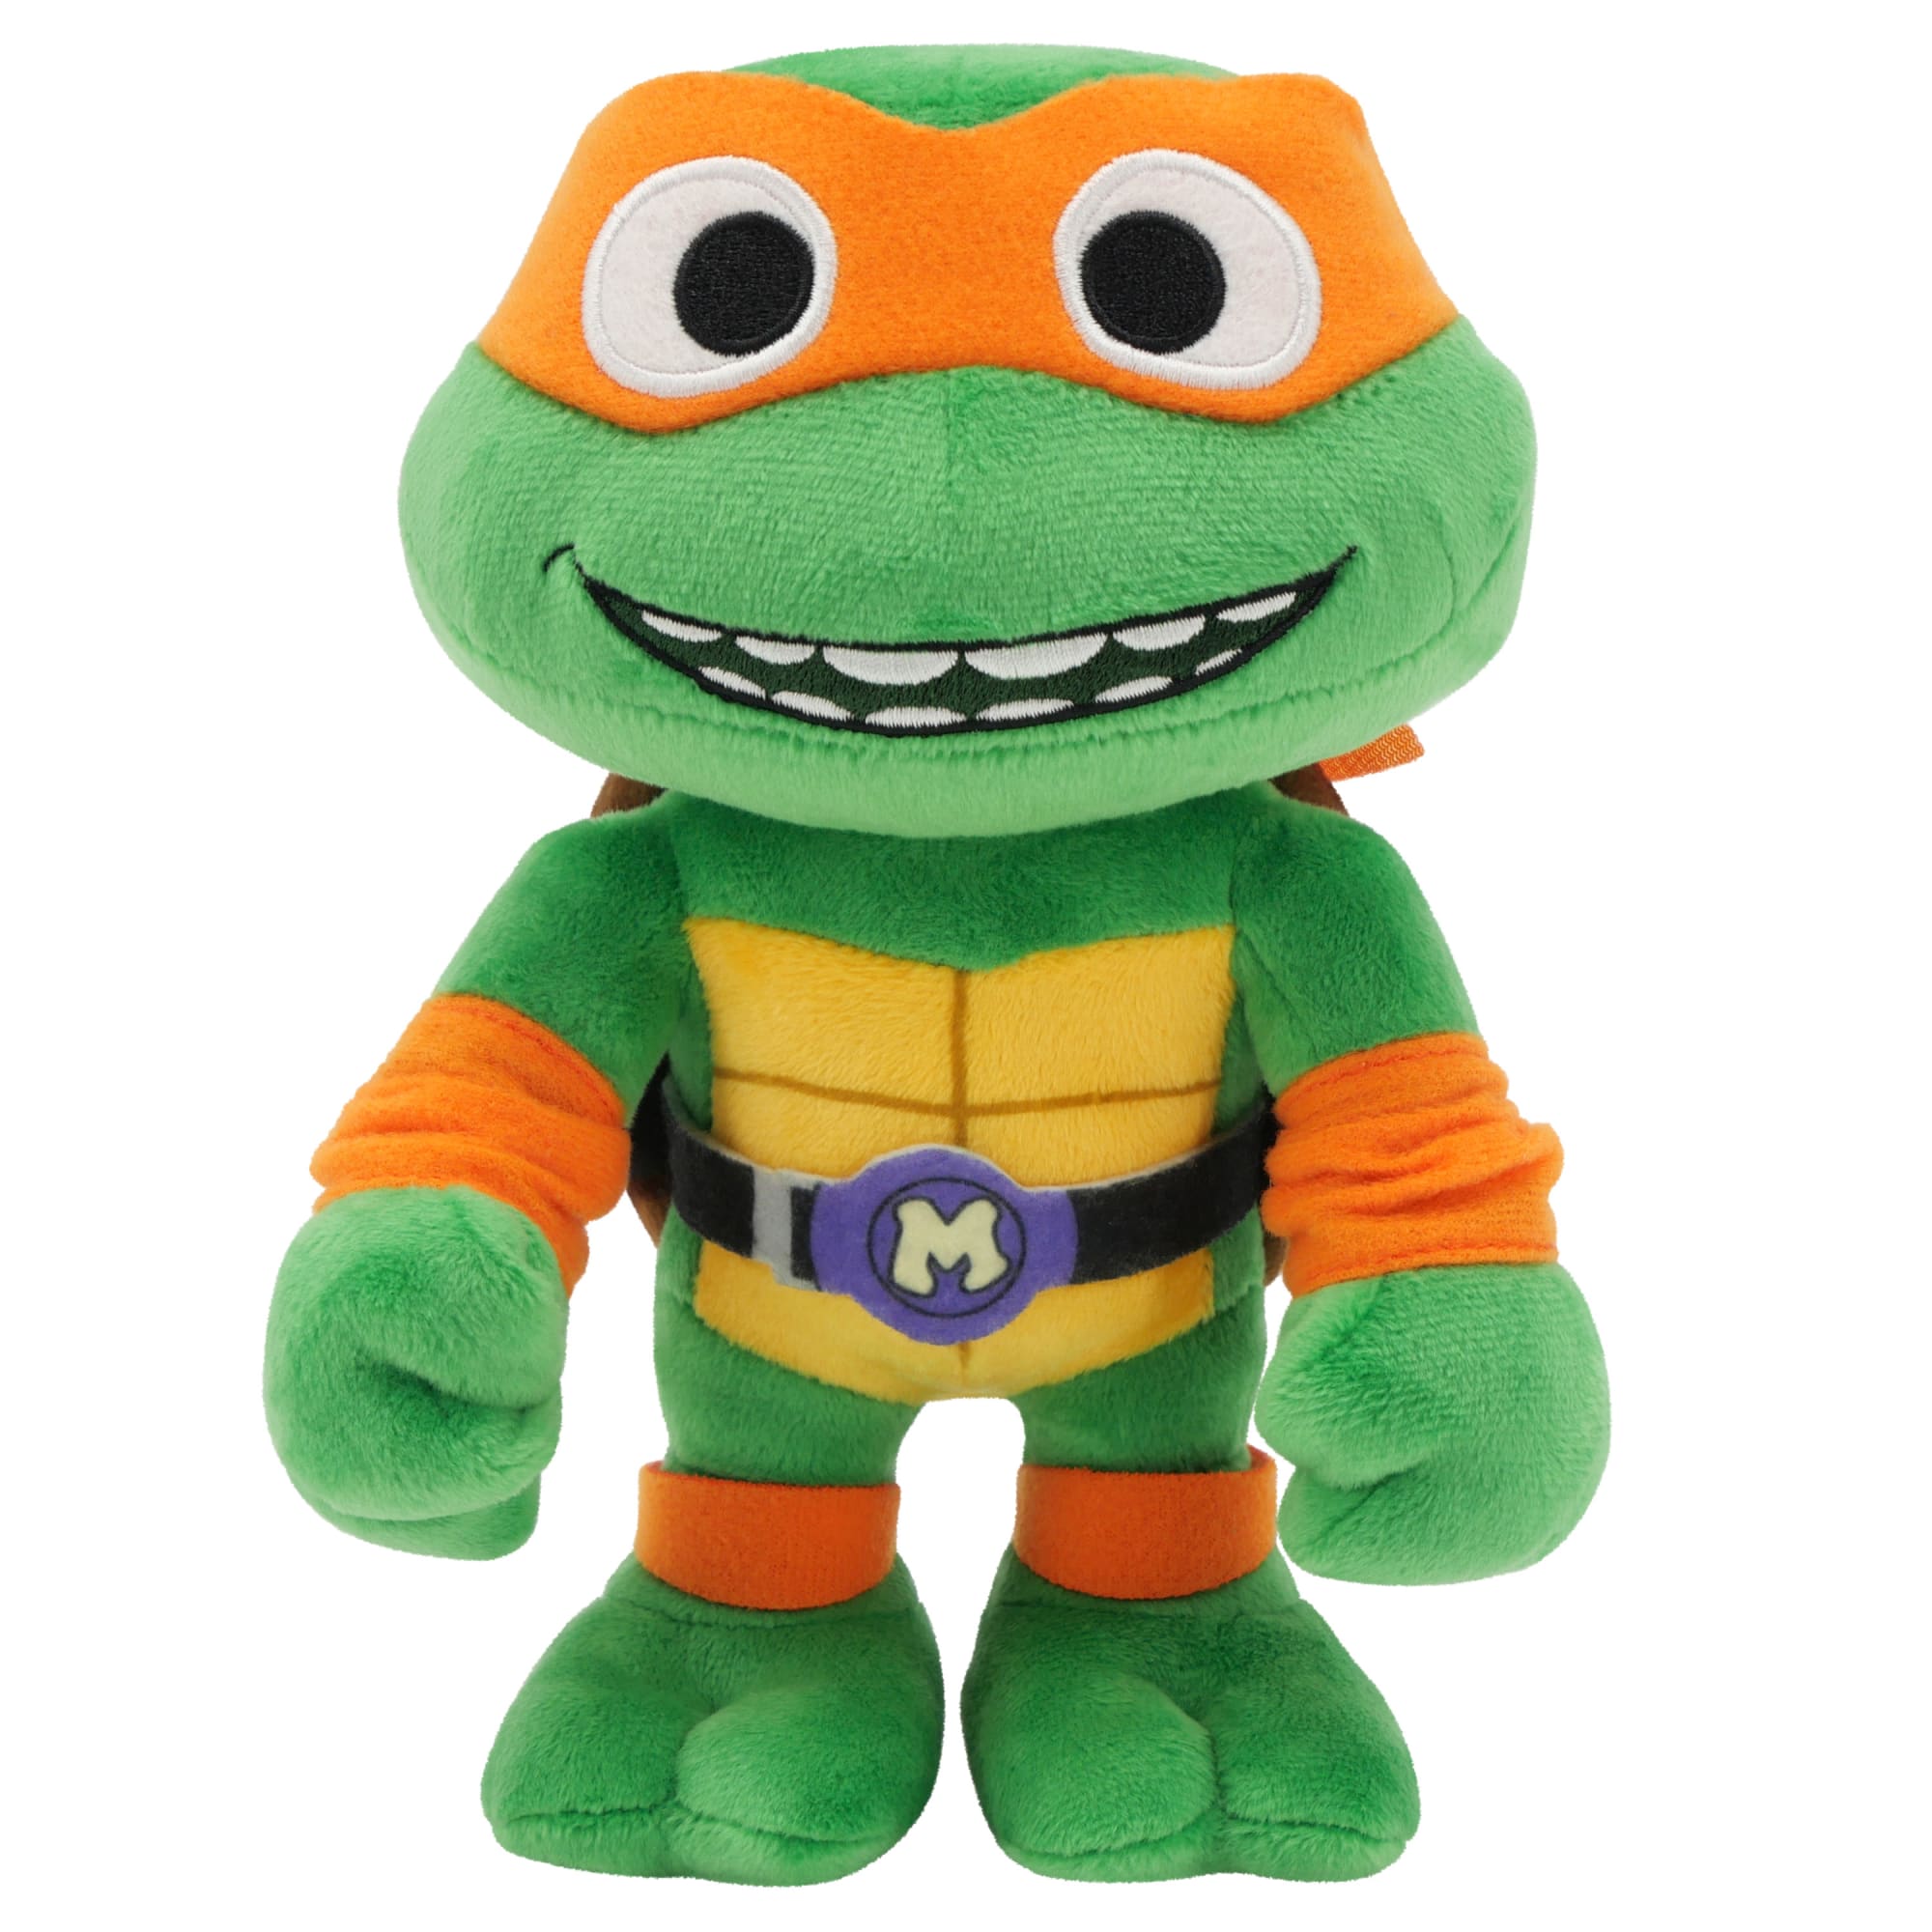 Teenage Mutant Ninja Turtles: Mutant Mayhem Plush Toys Cuutopia, 10 Inch  TMNT Rounded Pillows, Key Movie Characters